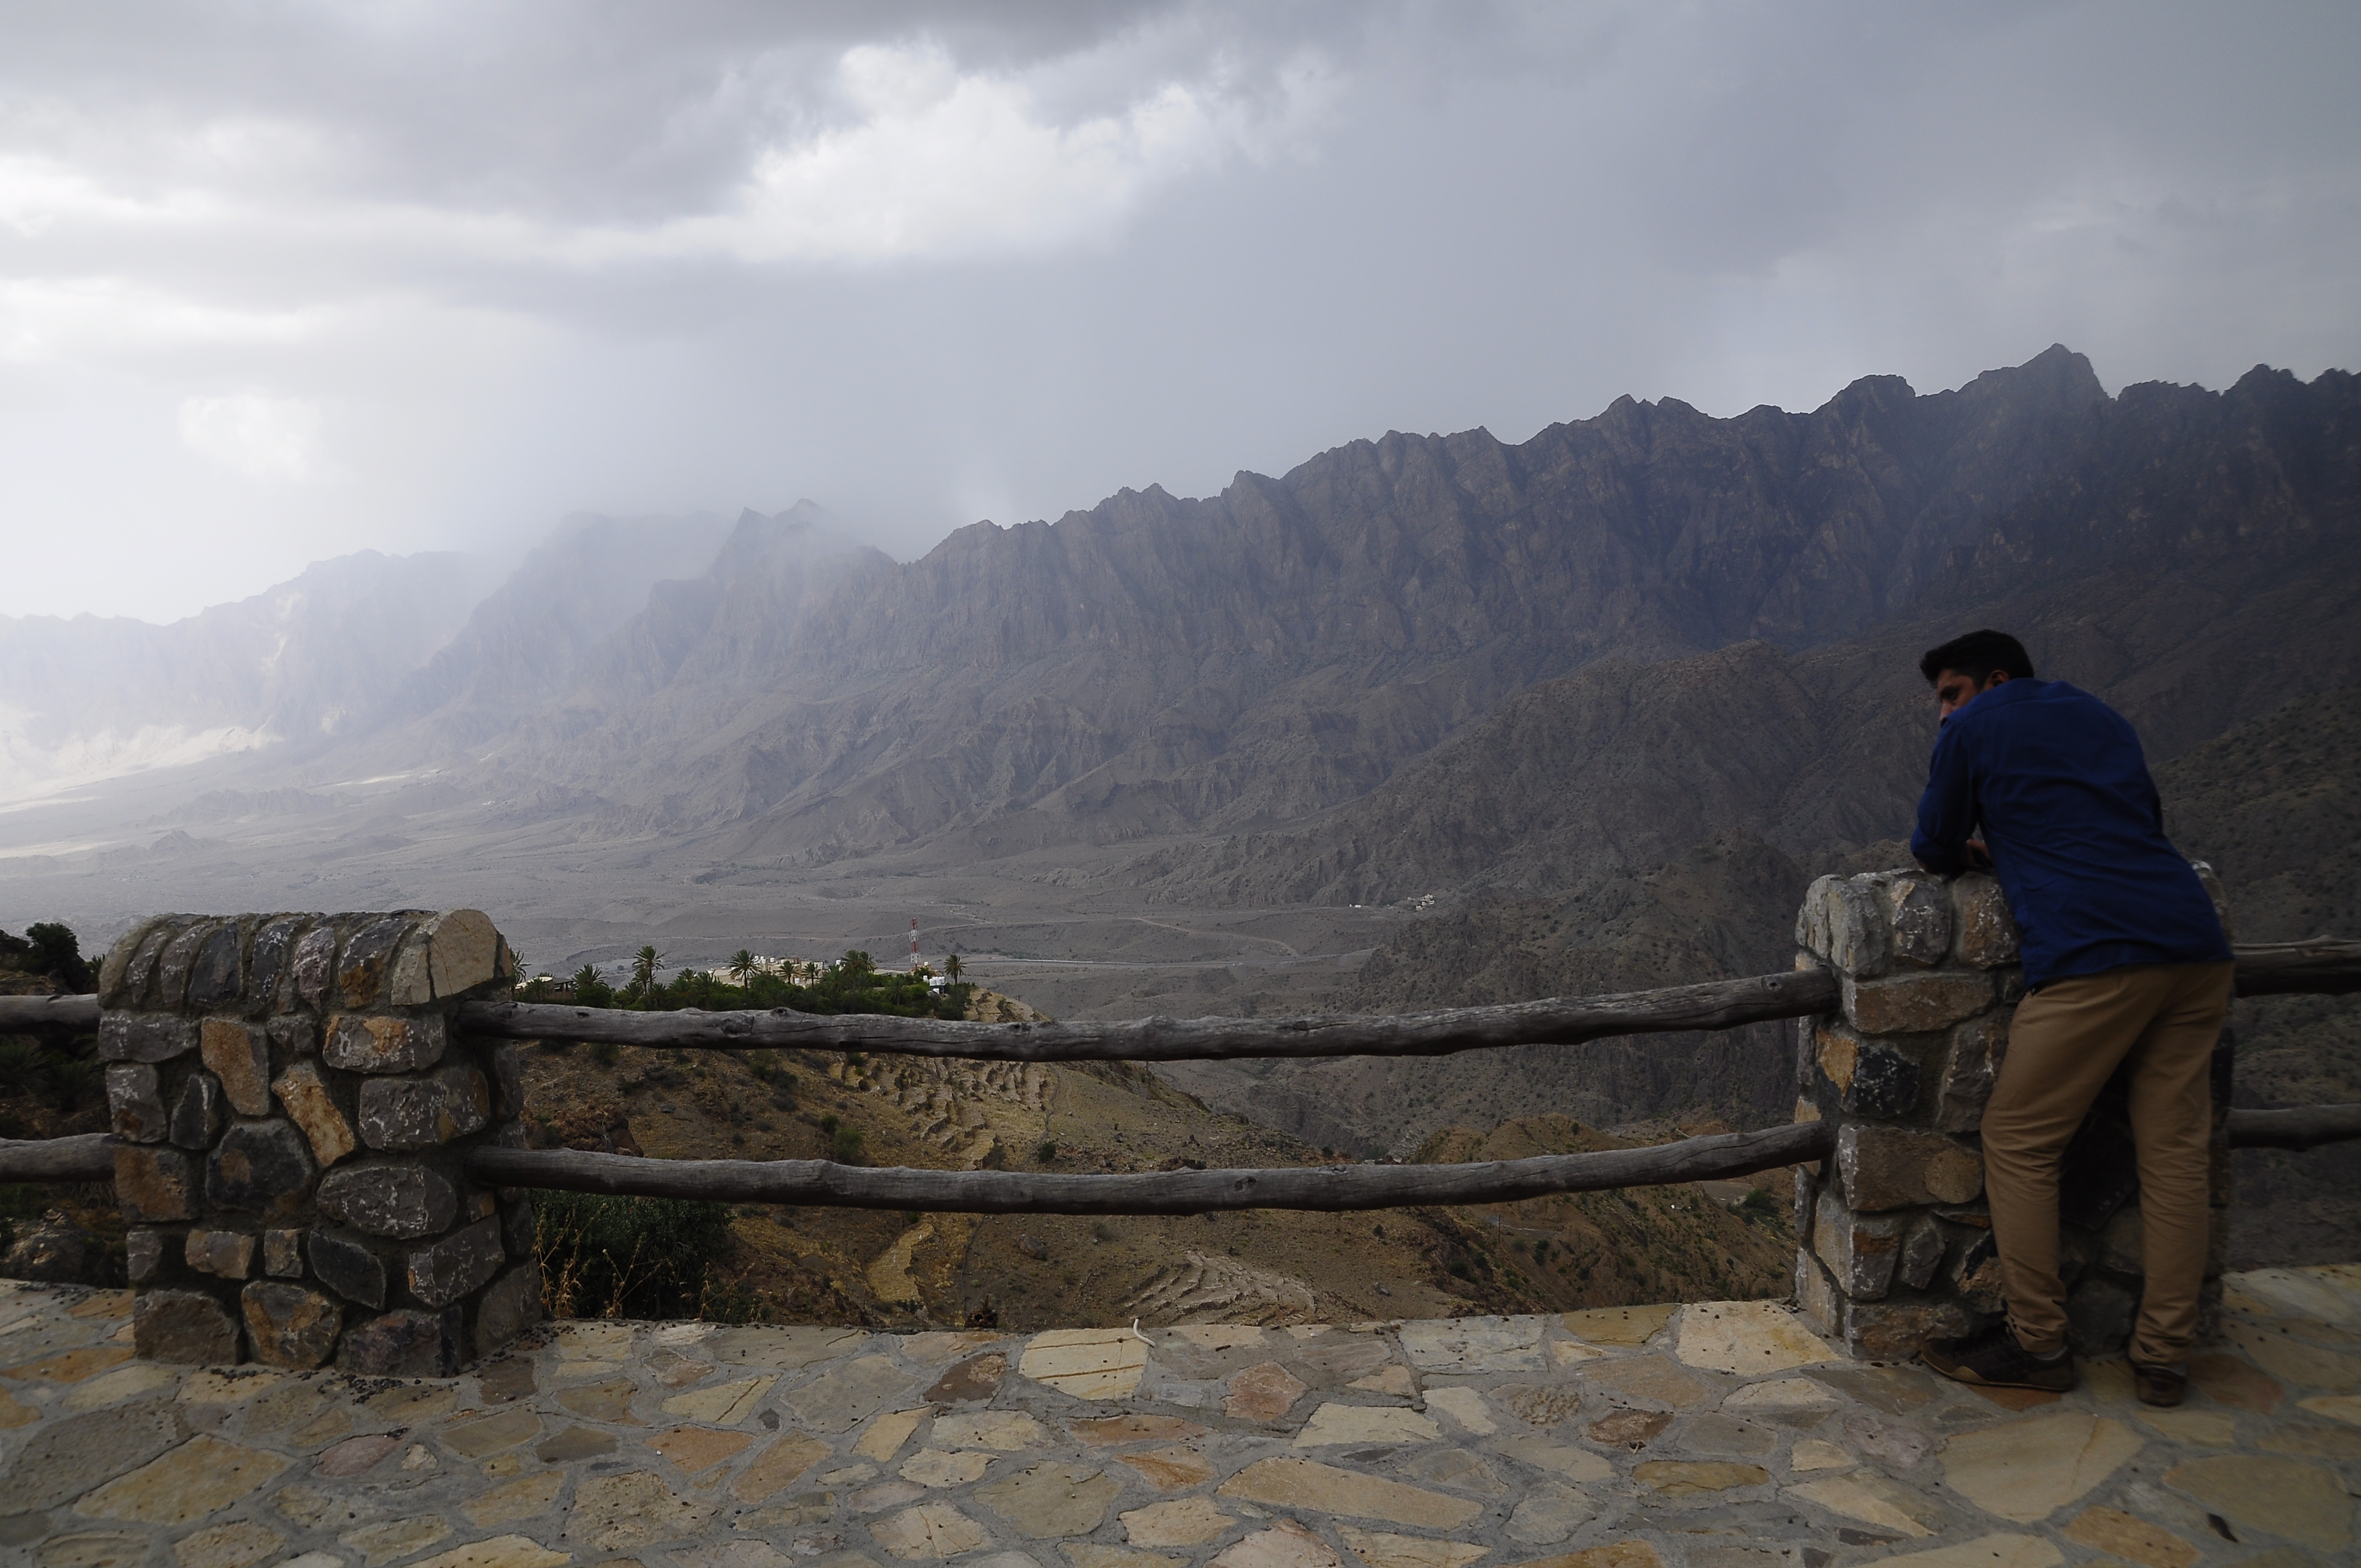 Oman tourism: Wakan village draws tourists through its stunning beauty